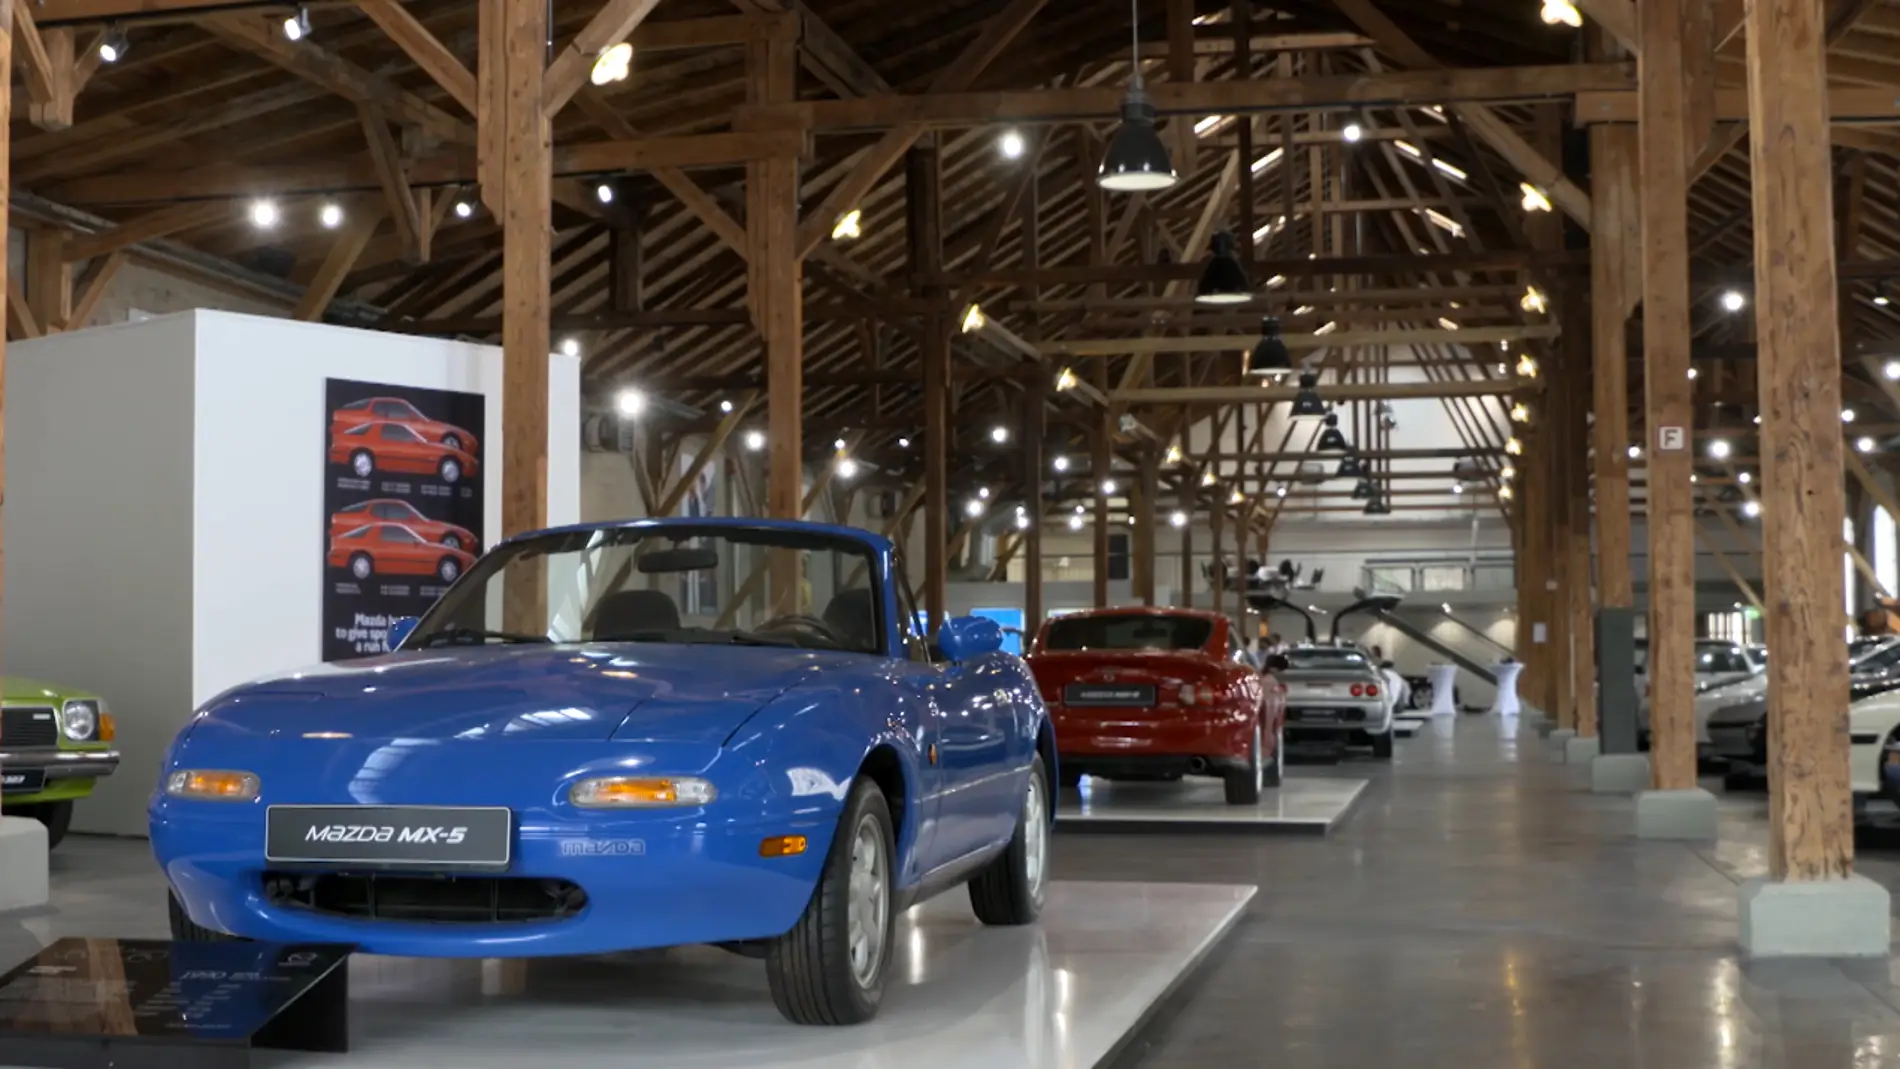 Mazda Classic - Automobile Museum Frey